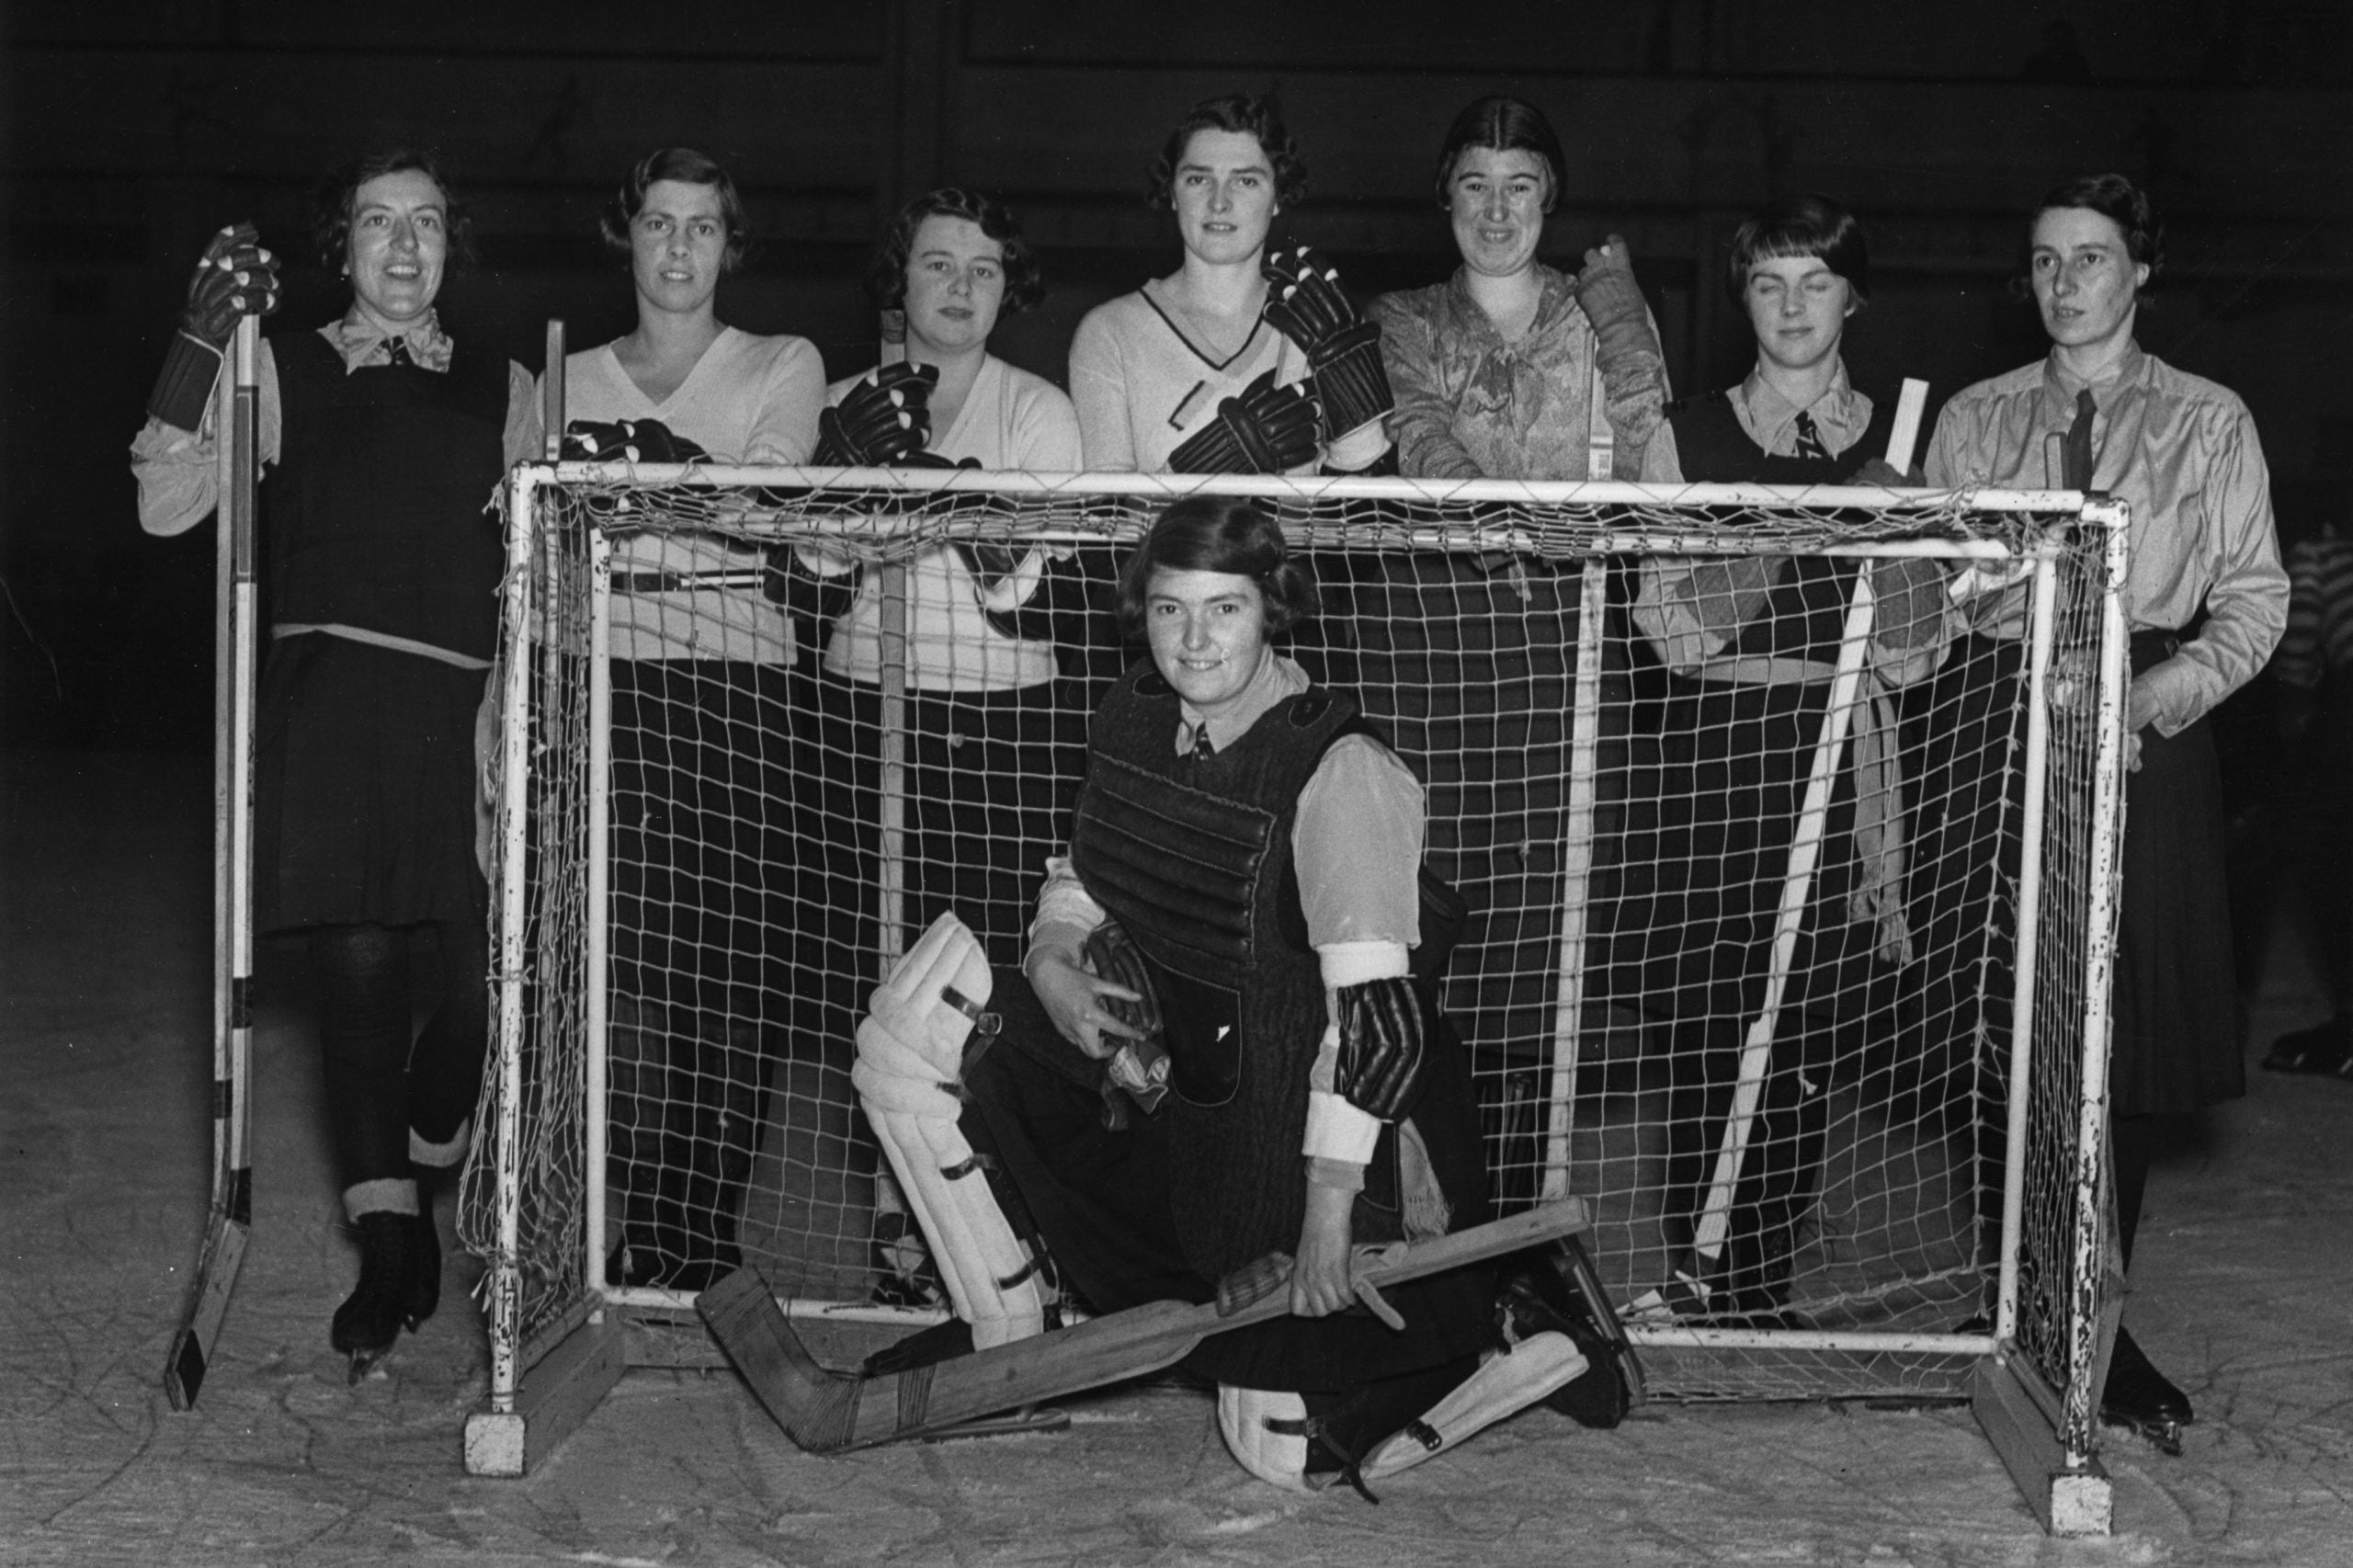 A Century Ago, Women Played Ice Hockey